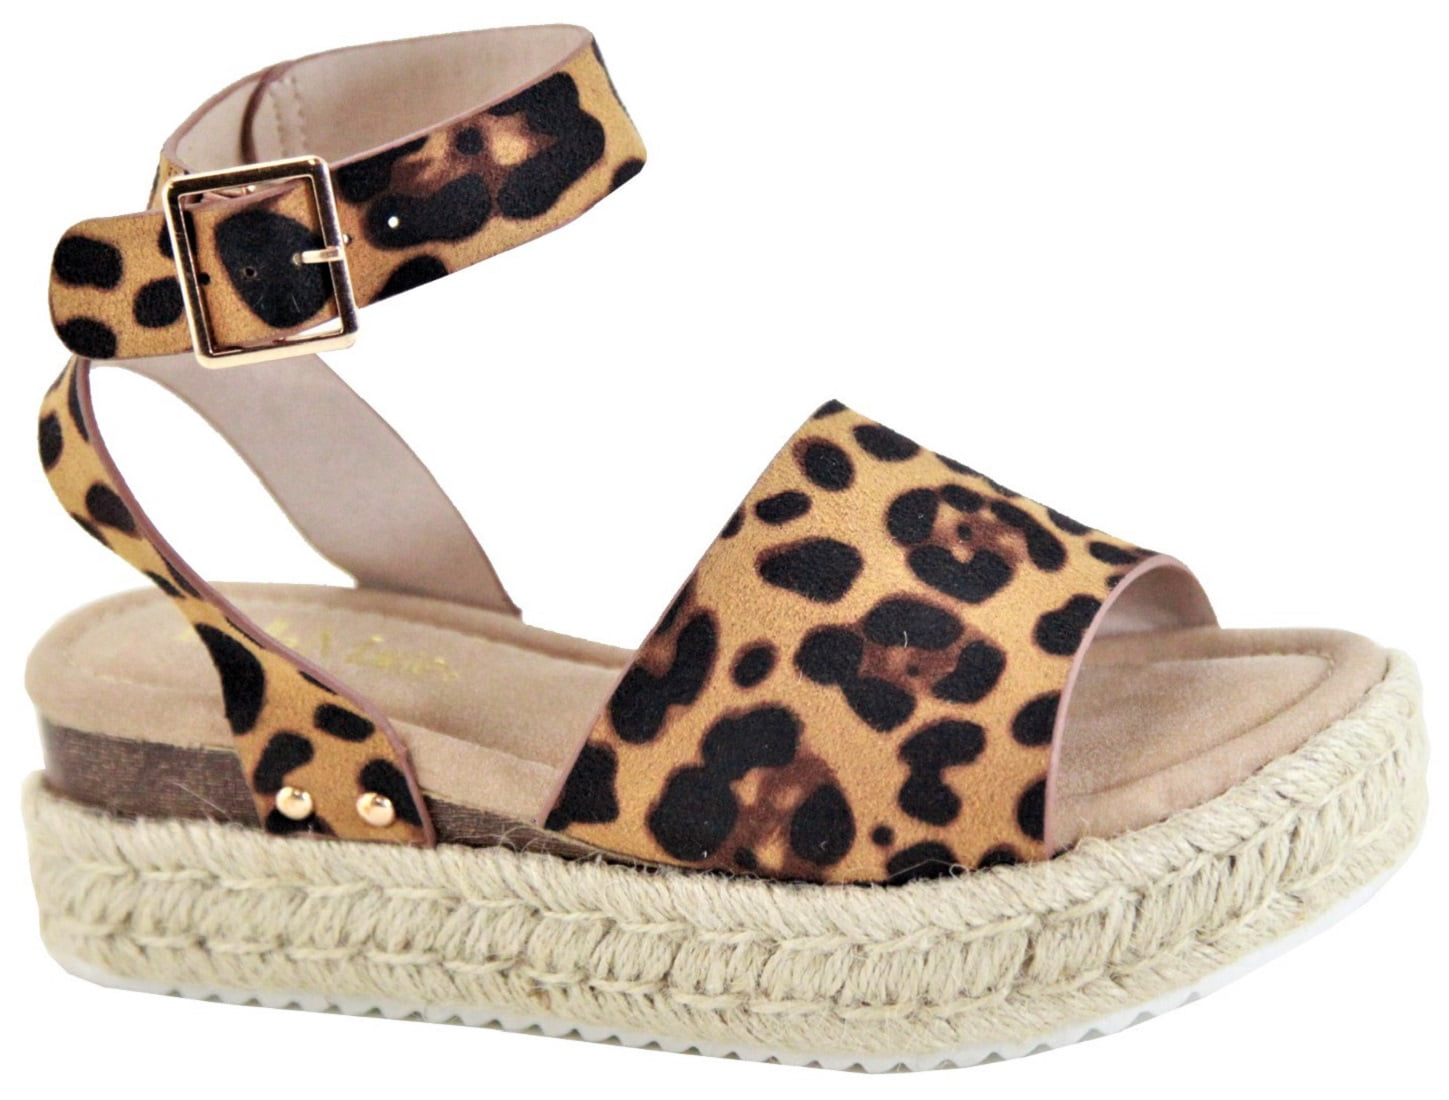 leopard print flatform sandals